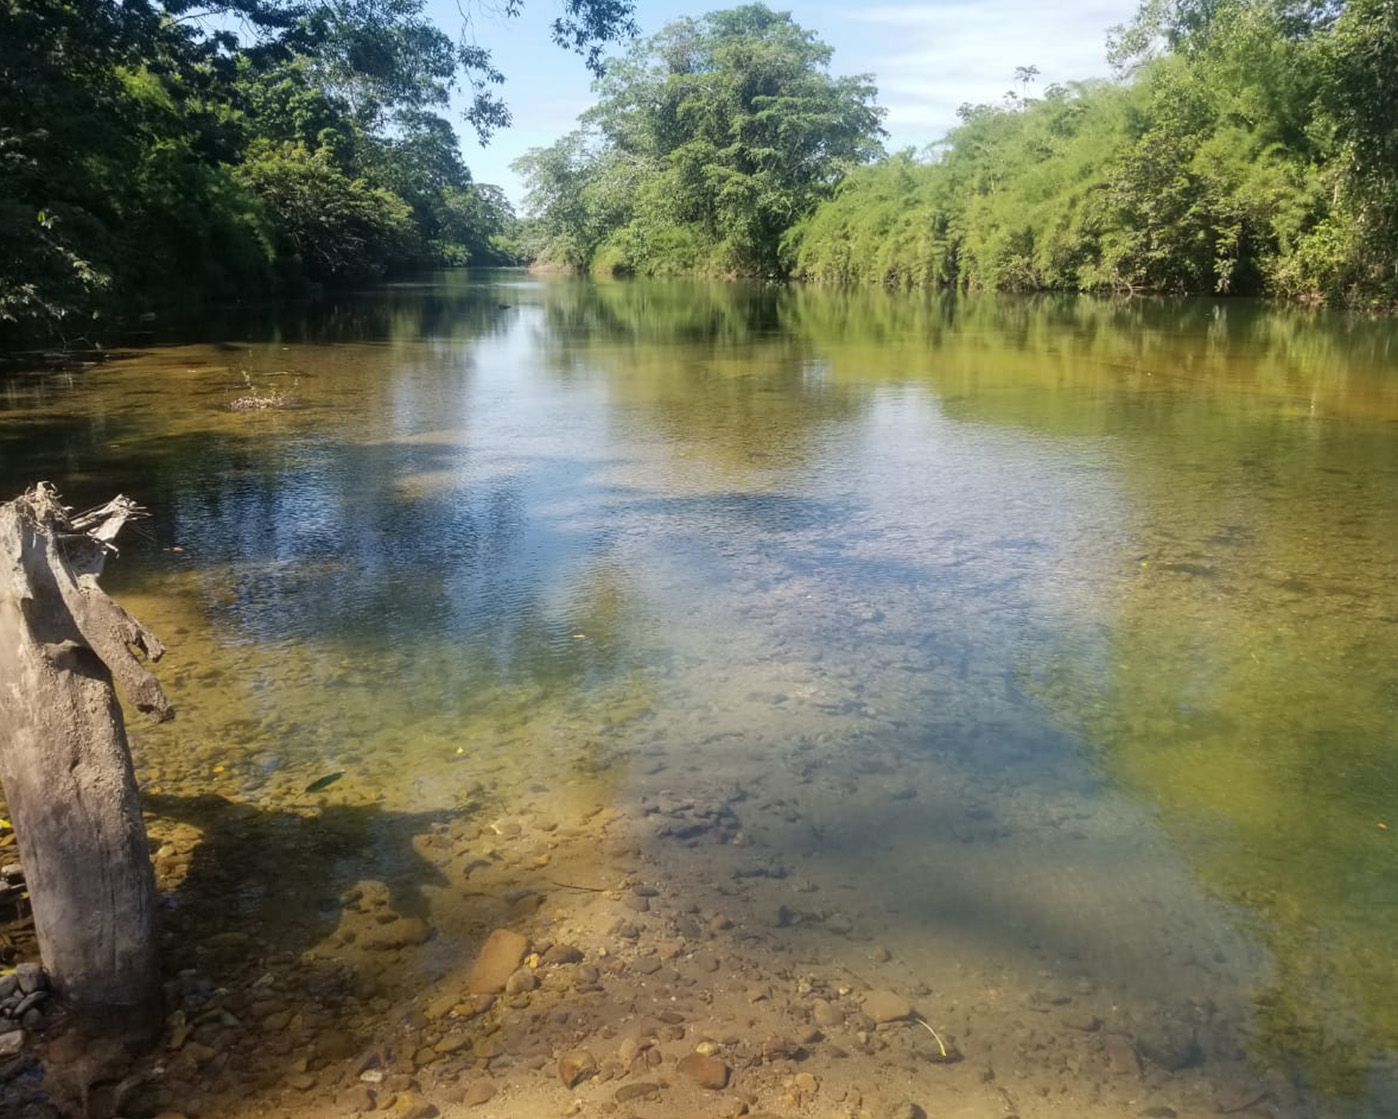 Image of property for sale in belmopan area, Belize.